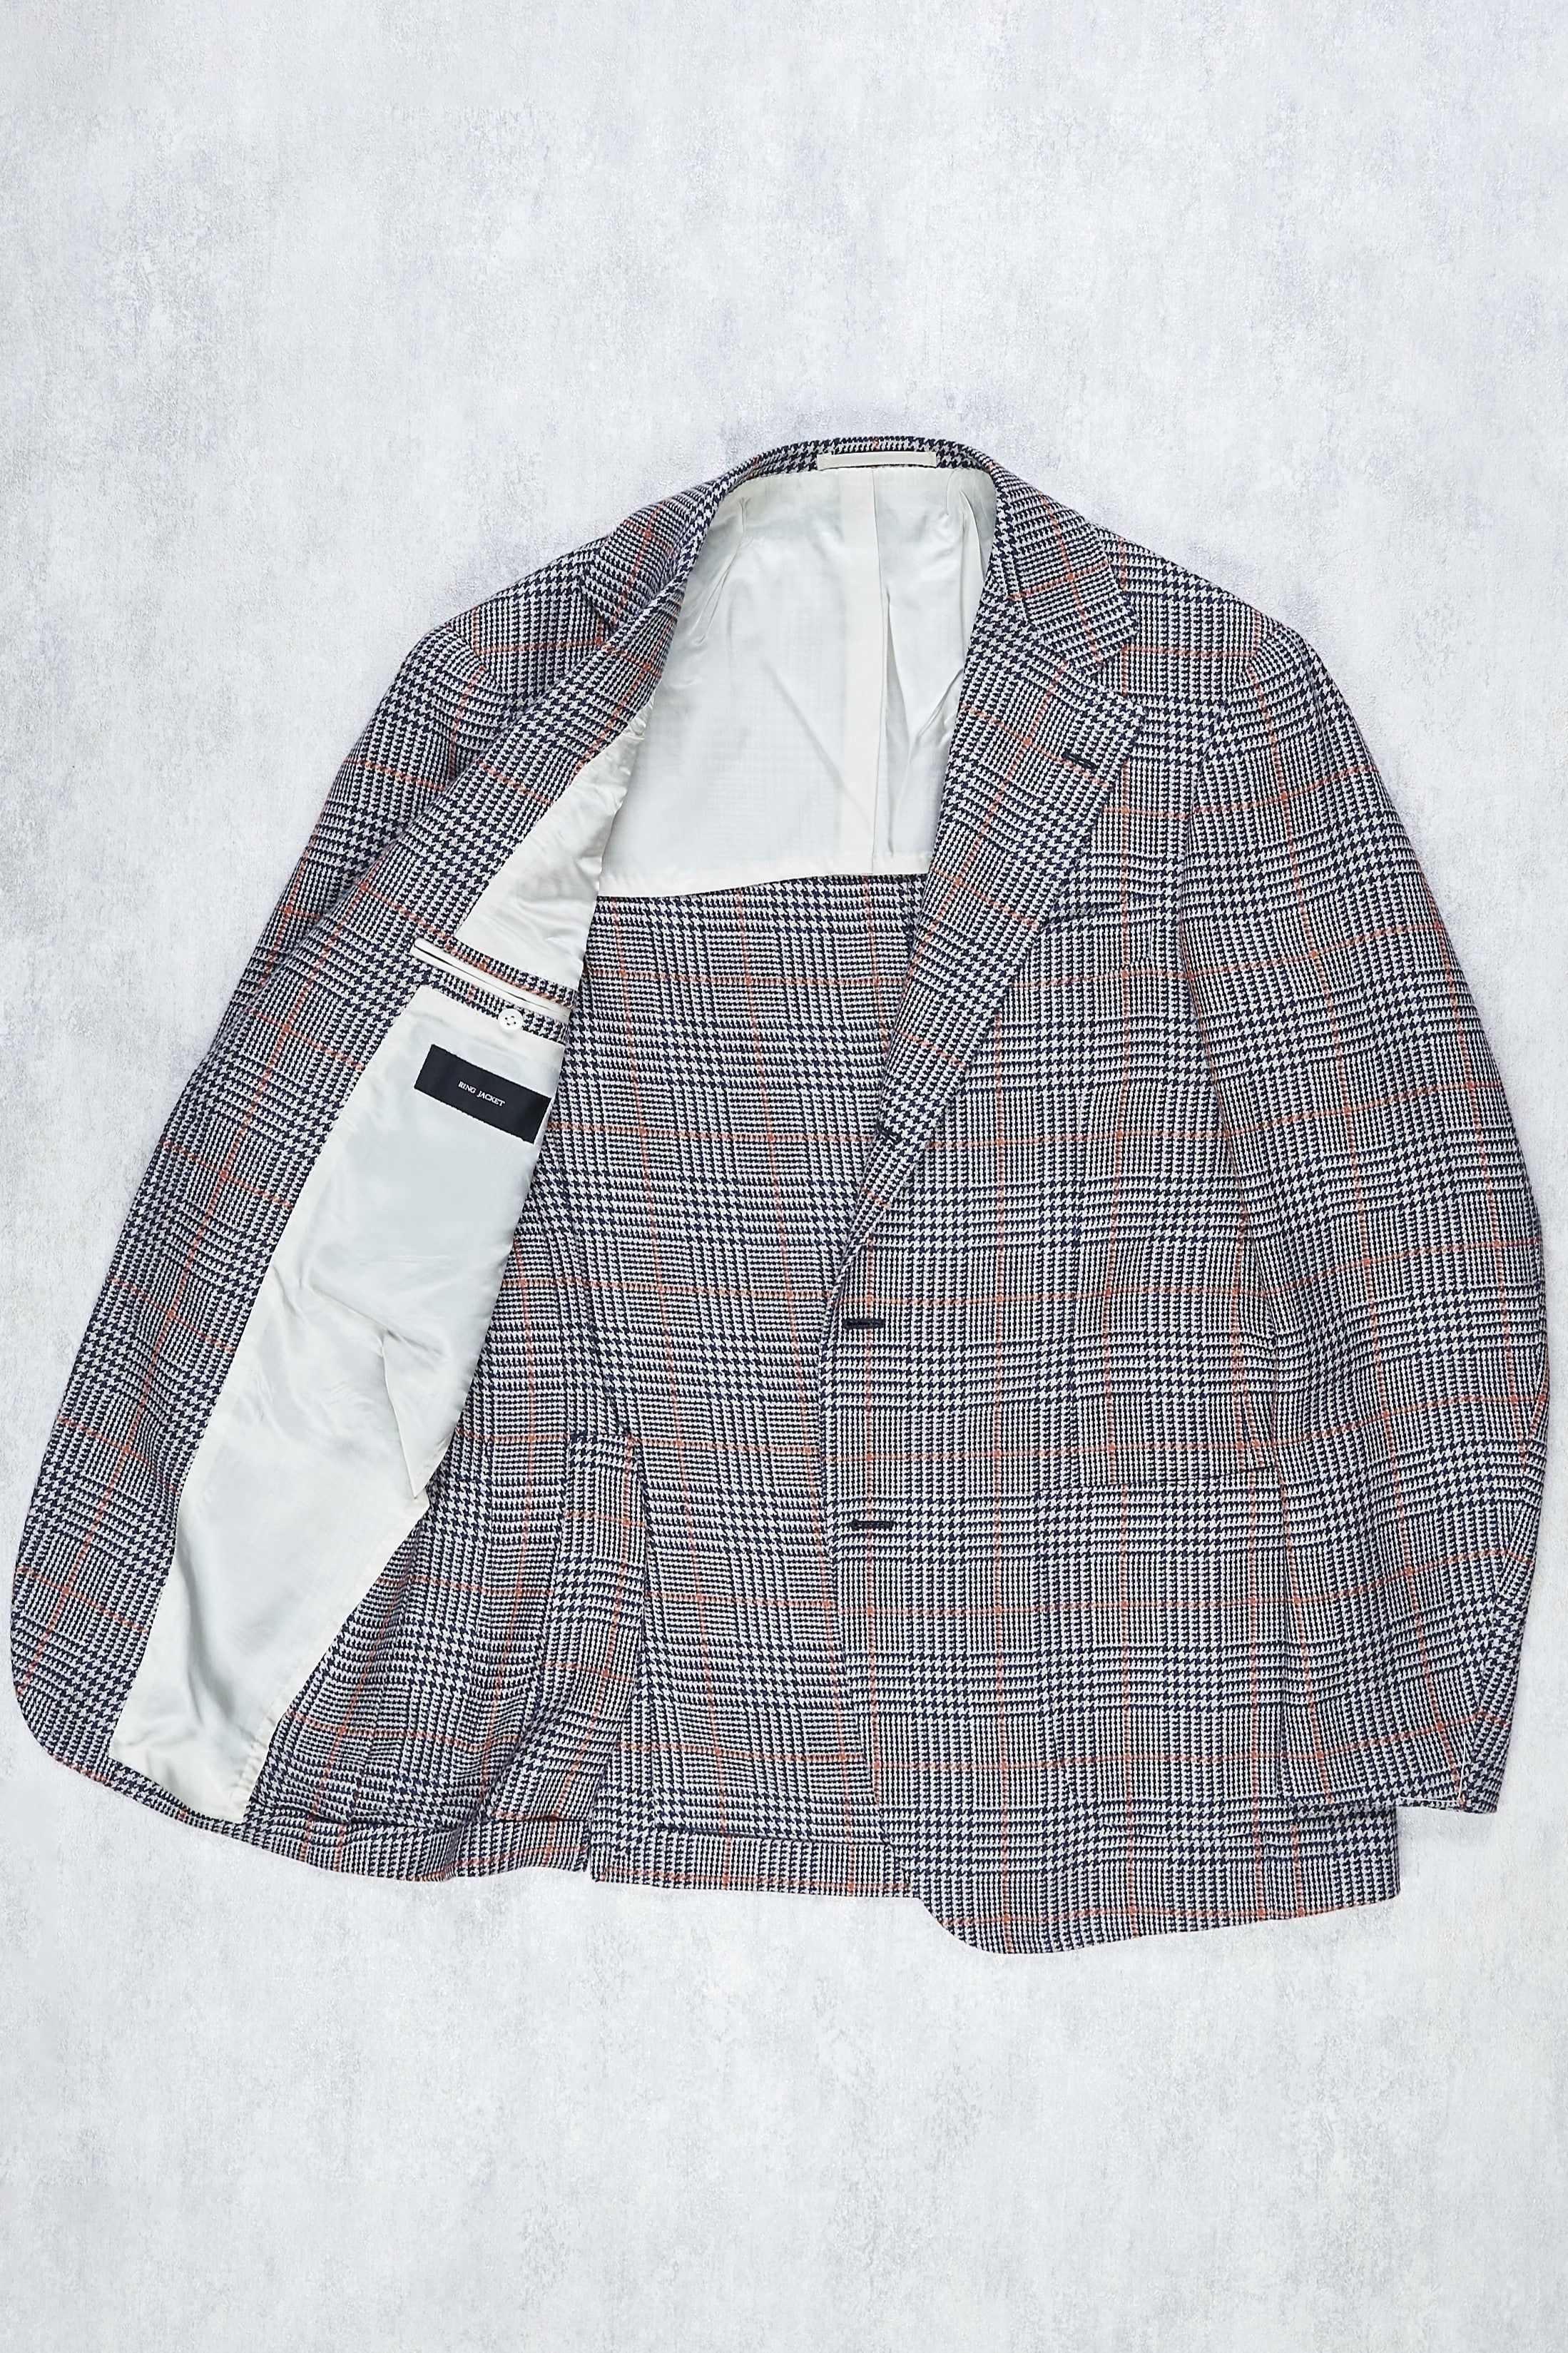 Ring Jacket 269 Navy White Orange Prince of Wales Check Wool-Linen Sport Coat